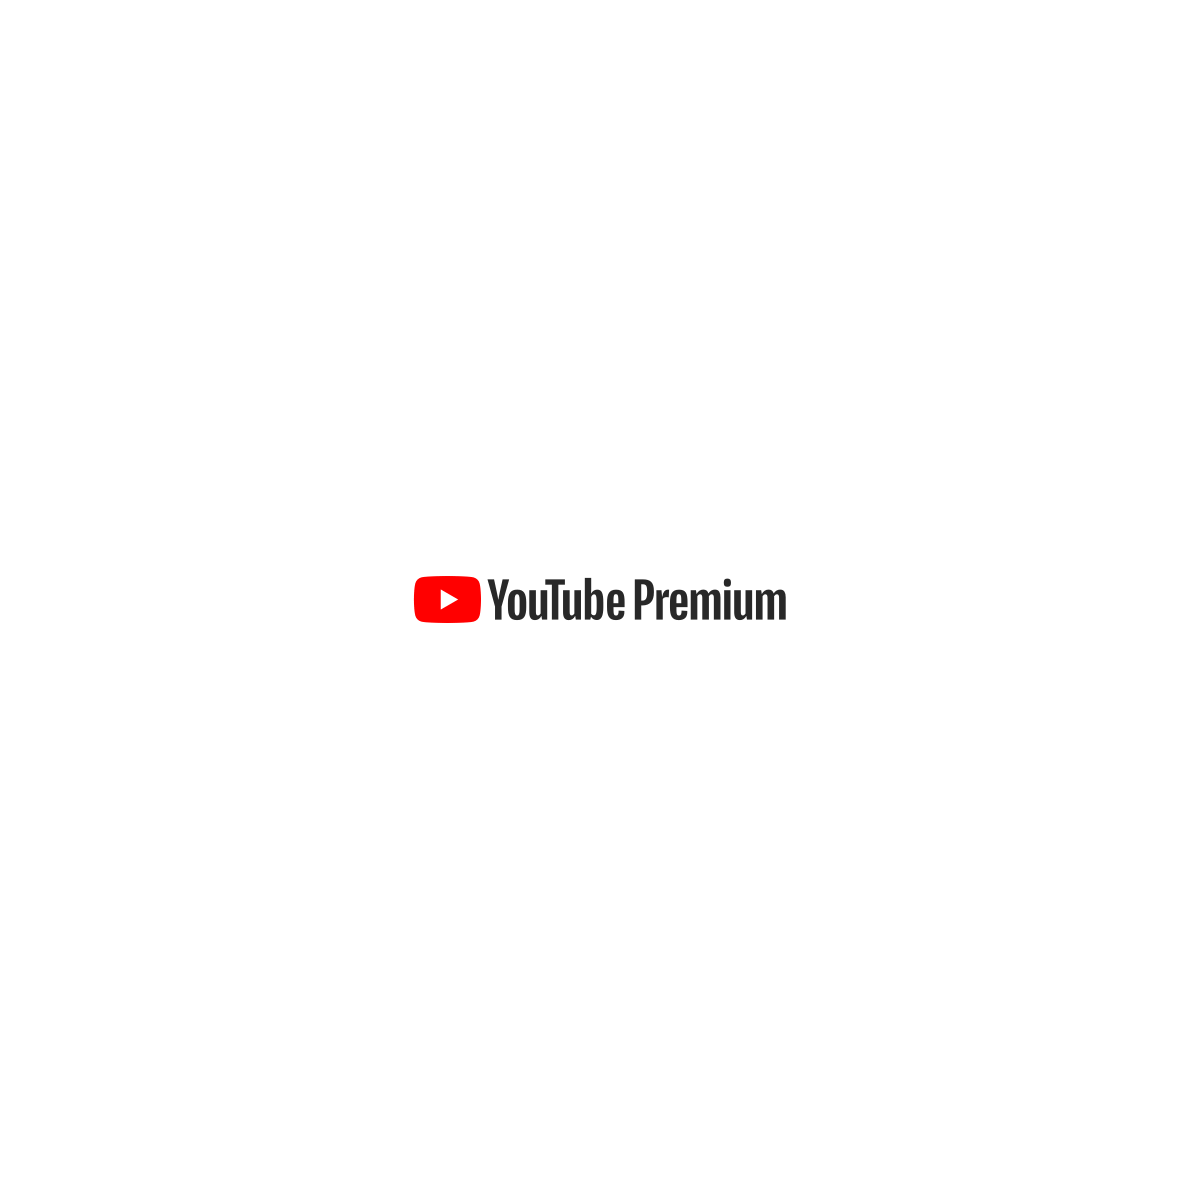 YouTube Apps Logo - YouTube Premium - YouTube